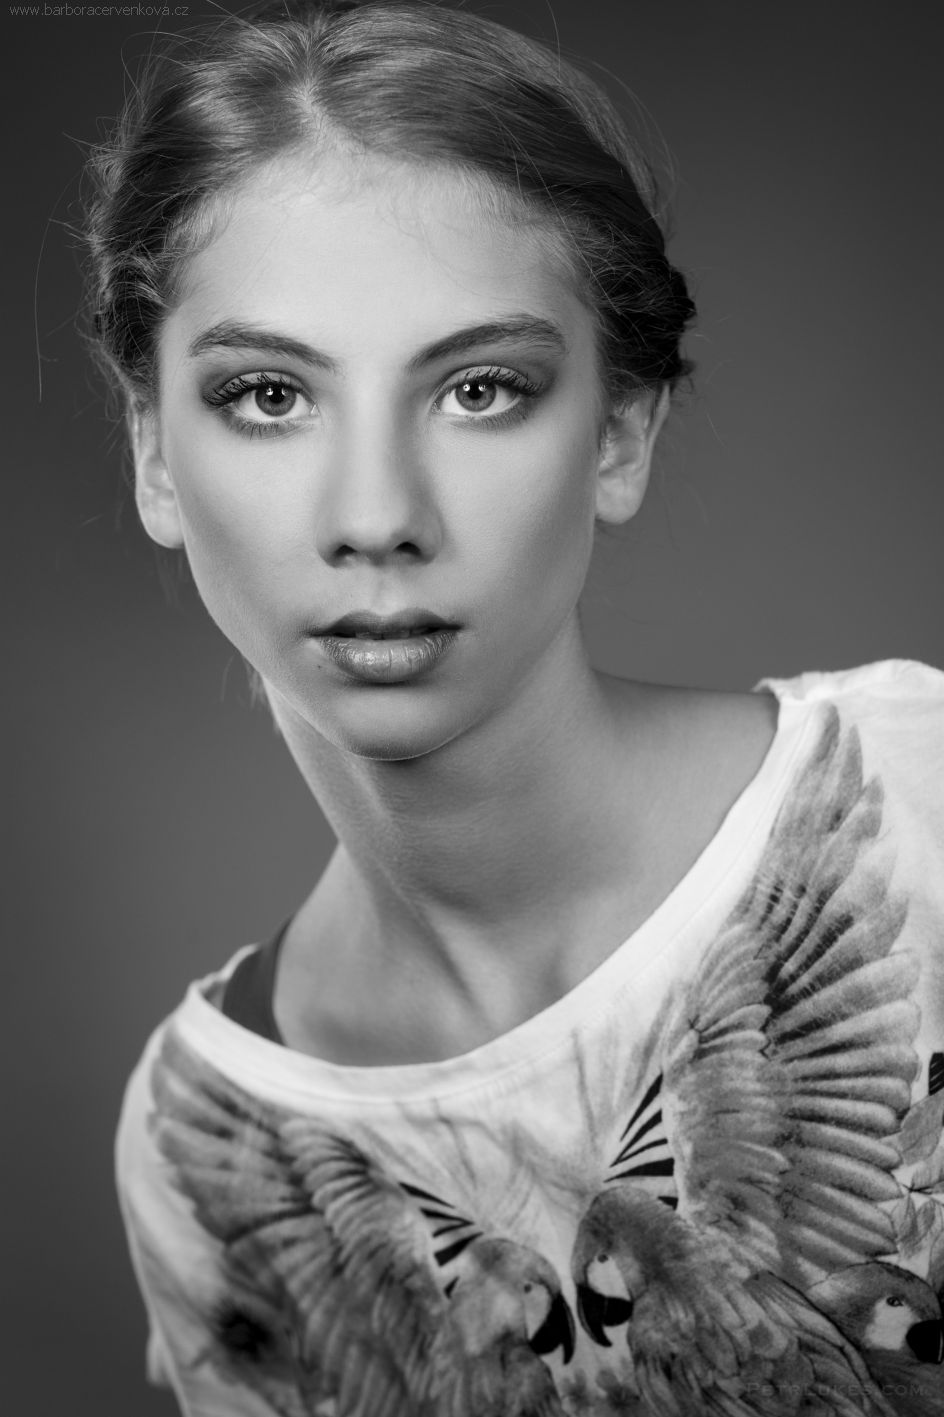 Photo: Petr Lukes / Model: Michaela Gavelcikova / Studio: Association of Make-up Artists and Stylists of the Czech Republic